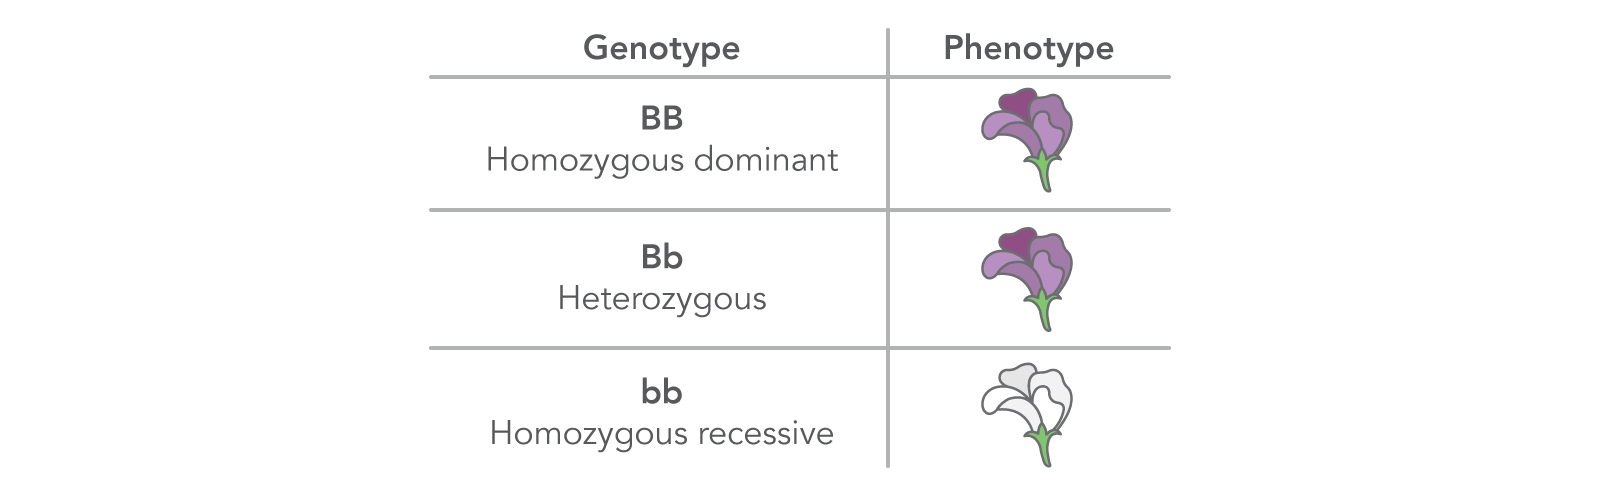 Genotyping terminology | IDT